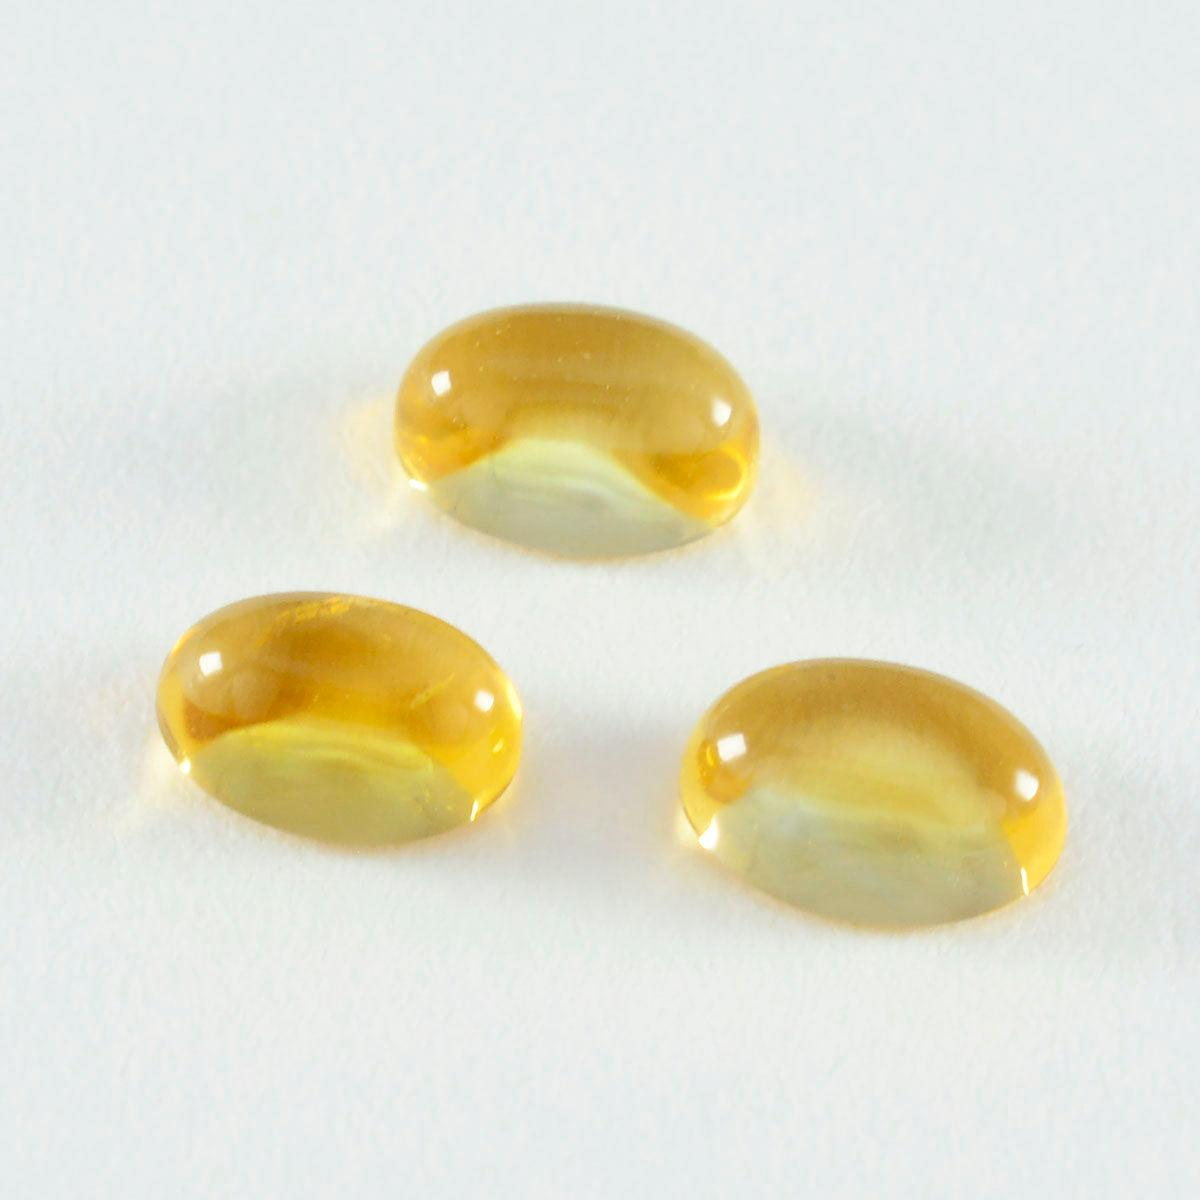 Riyogems 1PC Yellow Citrine Cabochon 8x10 mm Oval Shape nice-looking Quality Stone